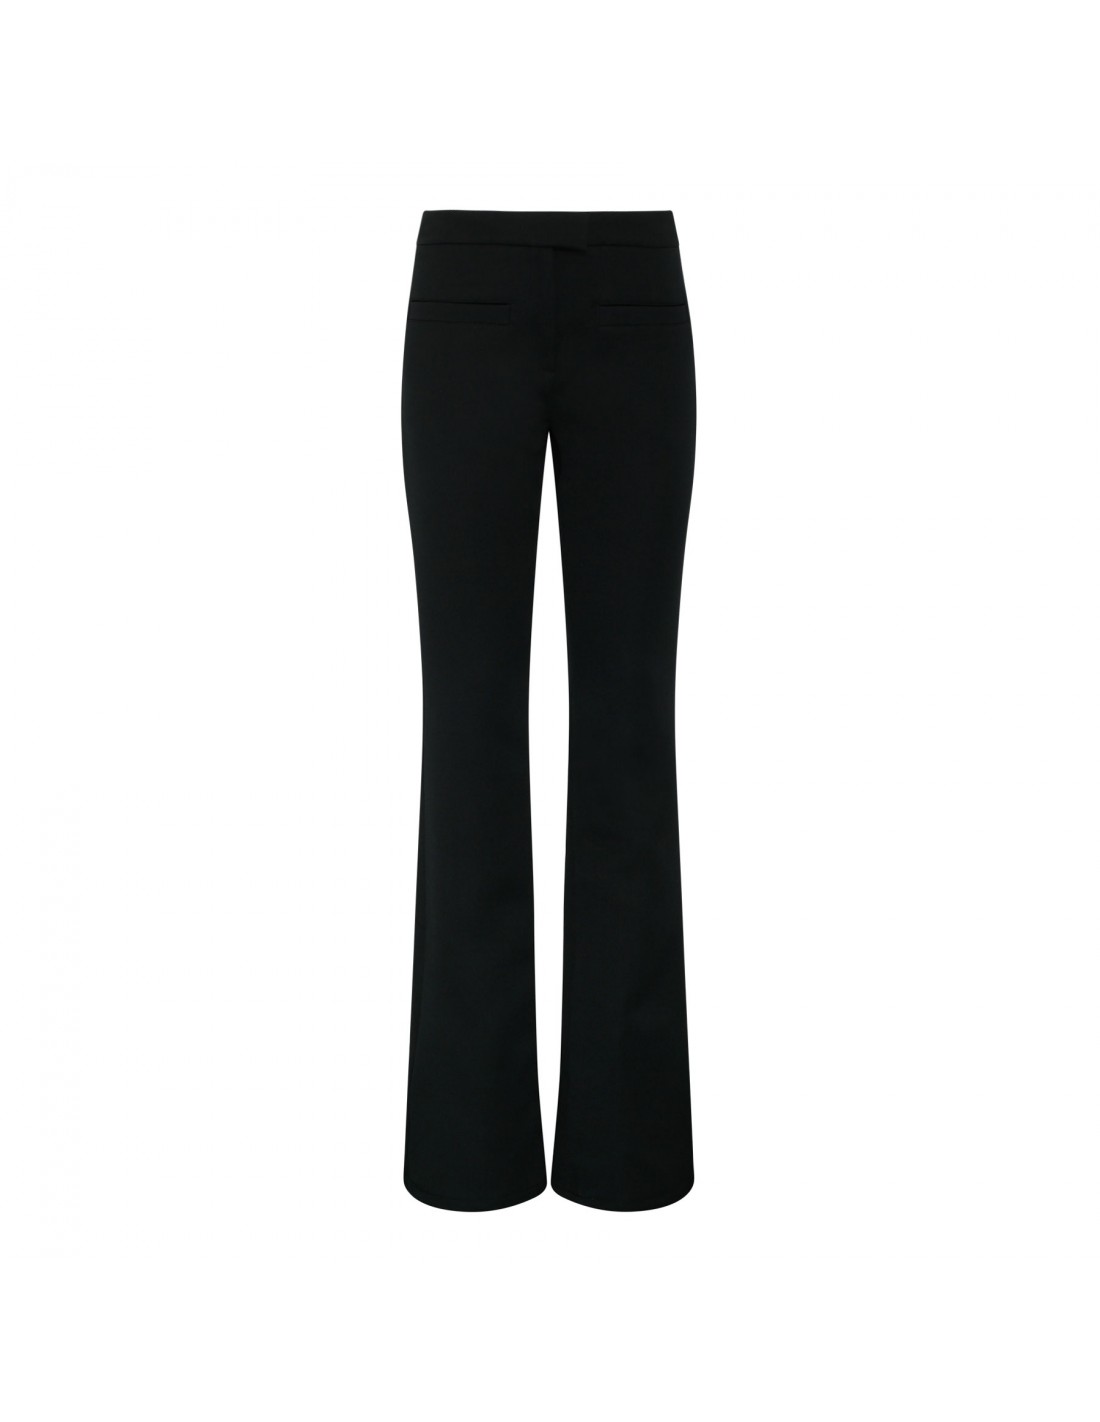 Black twill zipped pants